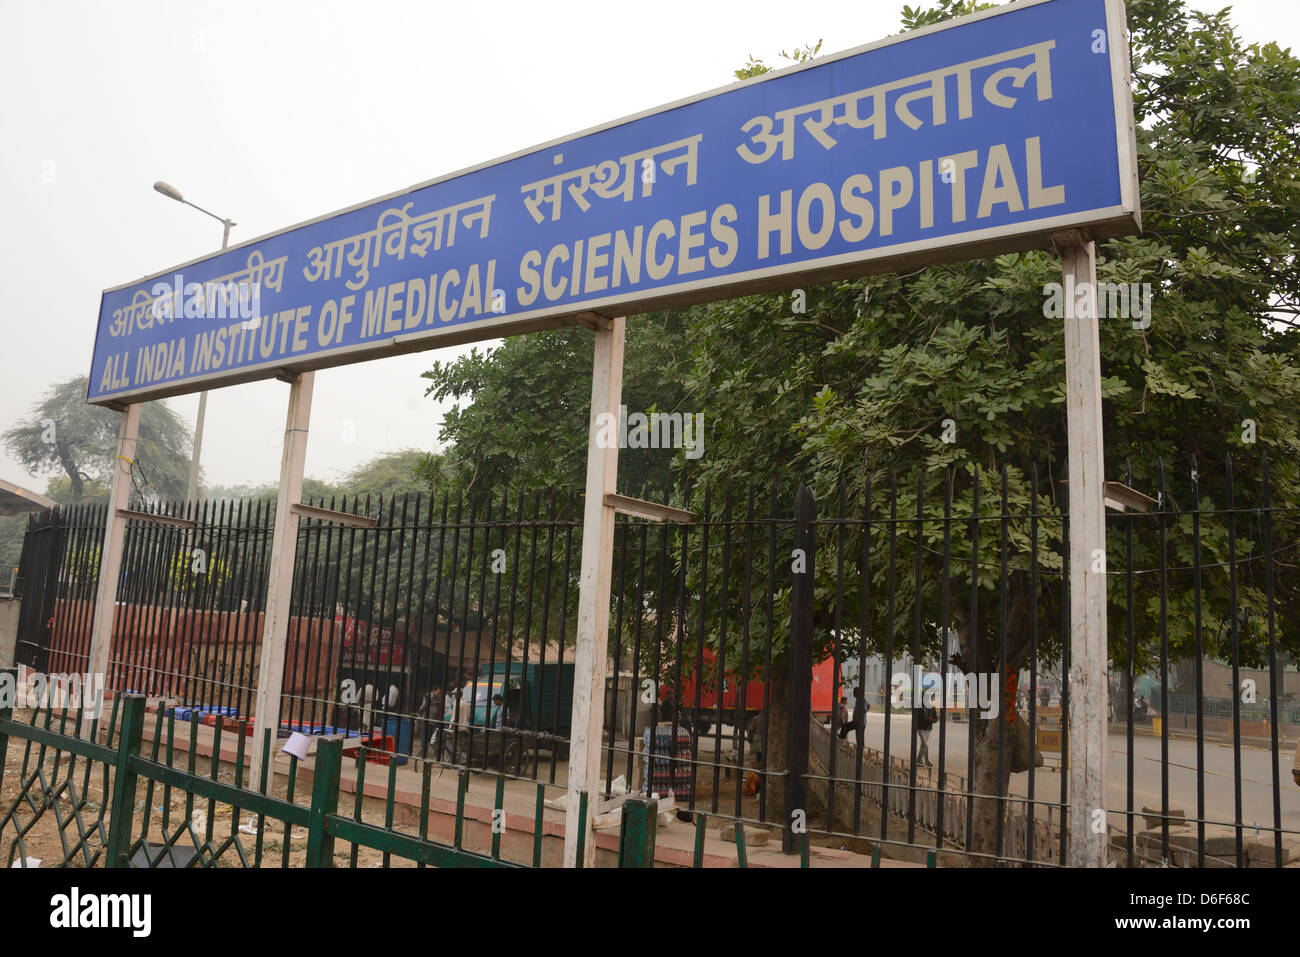 All India Institute of Medical Sciences Hospital in New Delhi, India Stock Photo